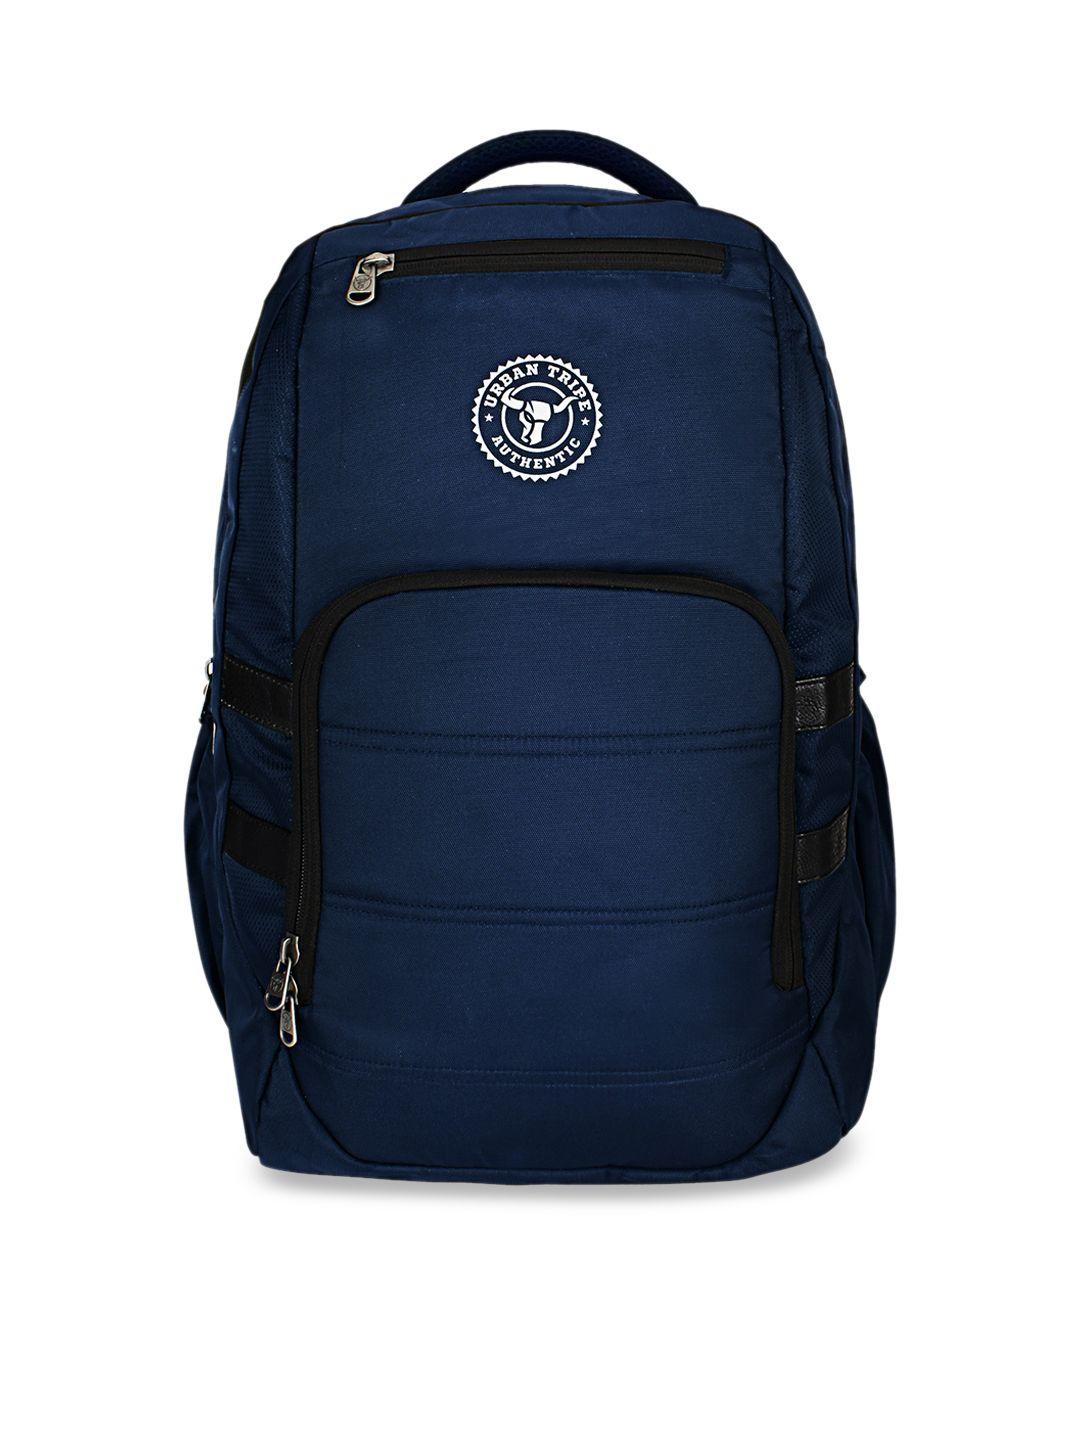 urban tribe unisex blue backpack